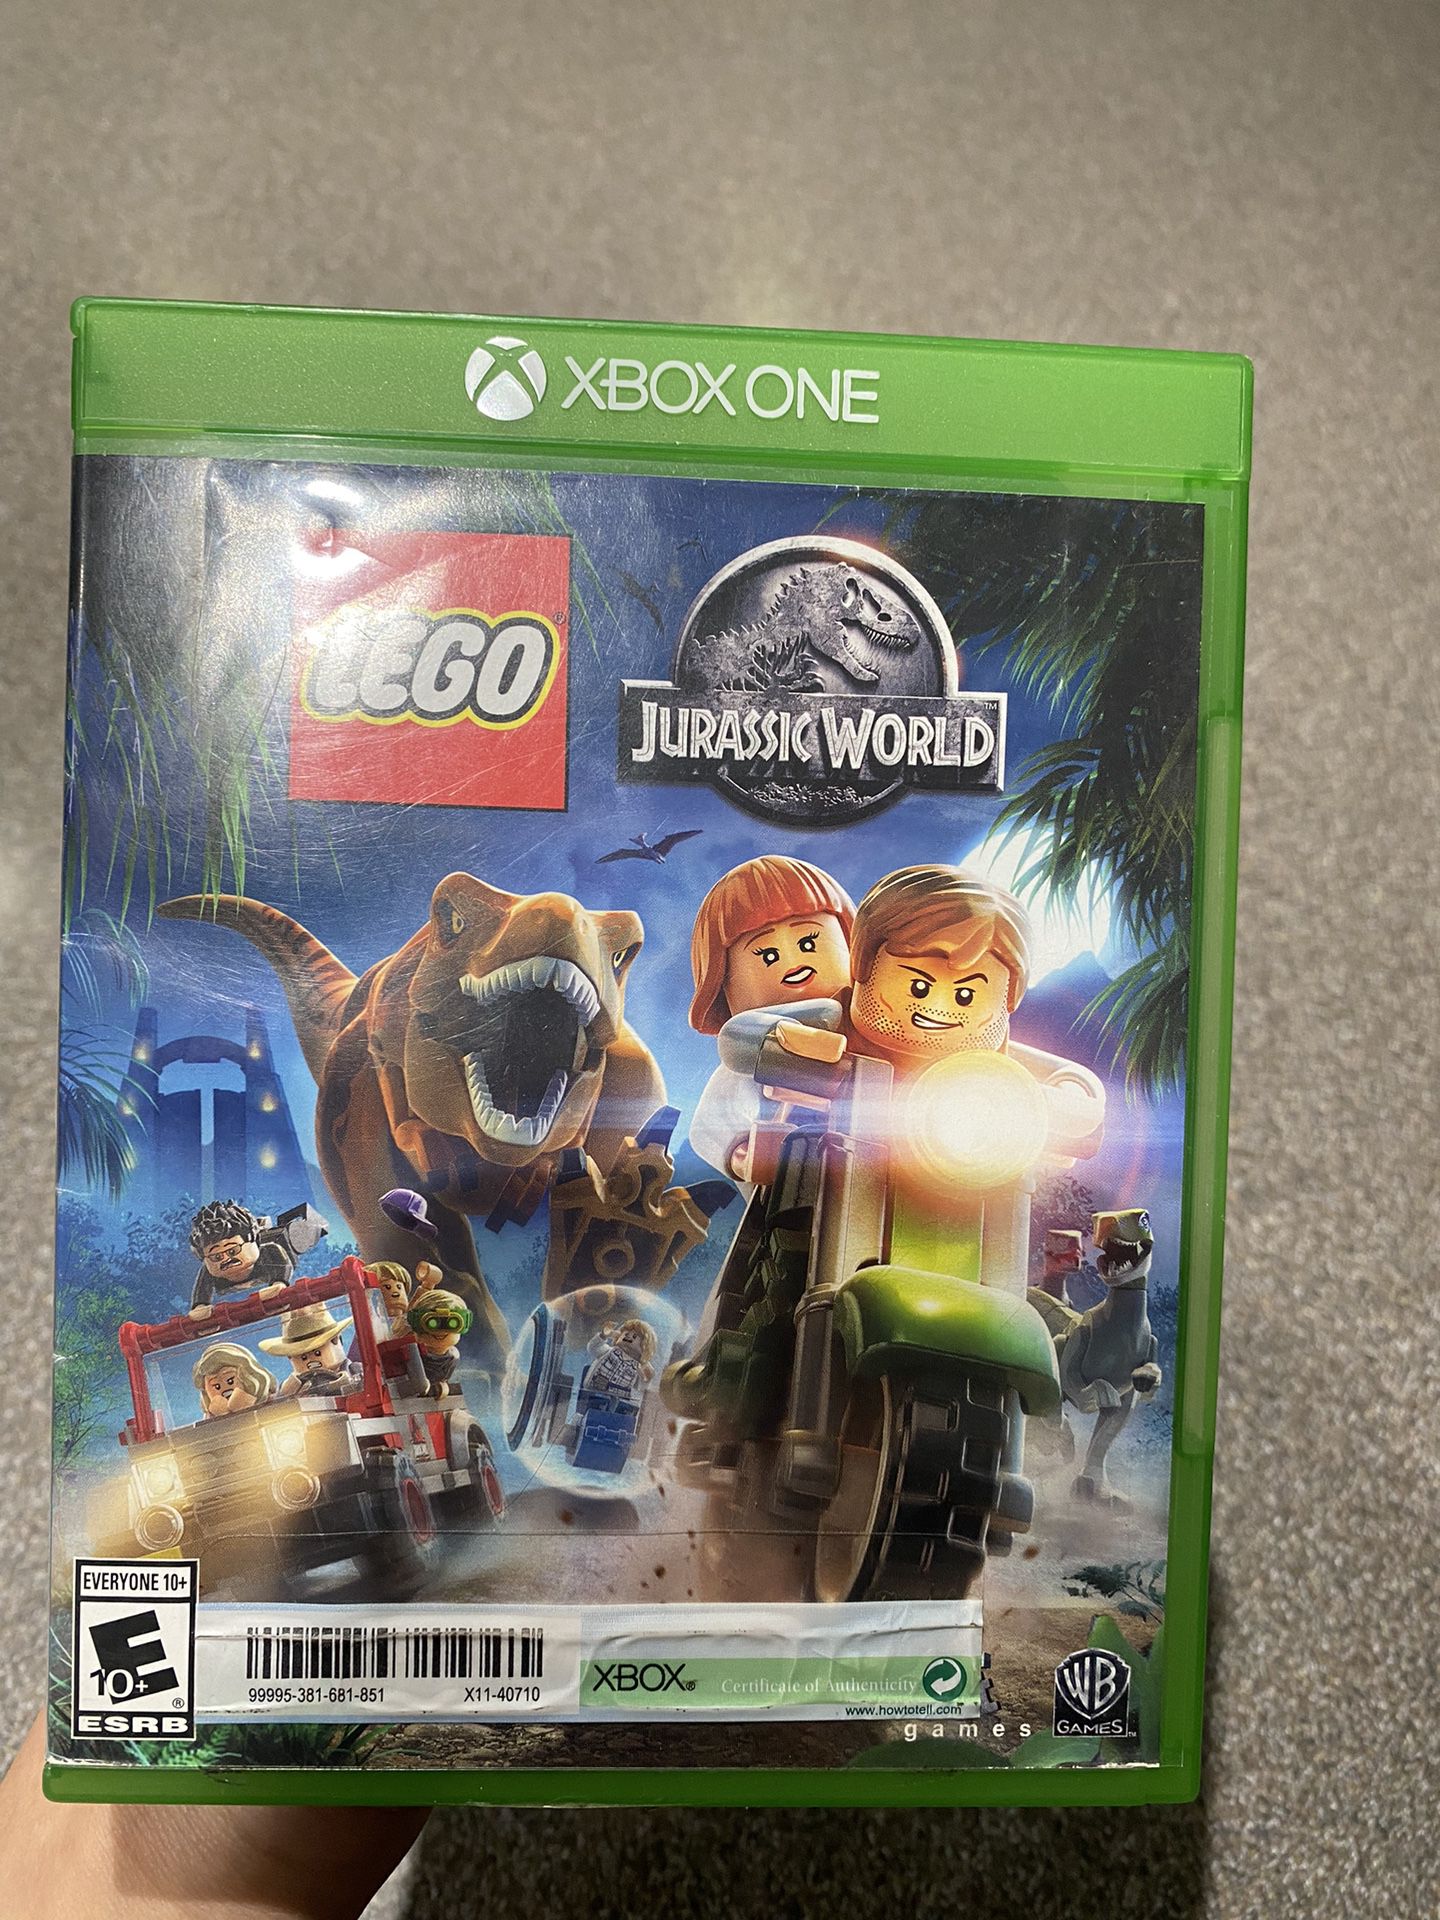 LEGO Jurassic World - Xbox One 